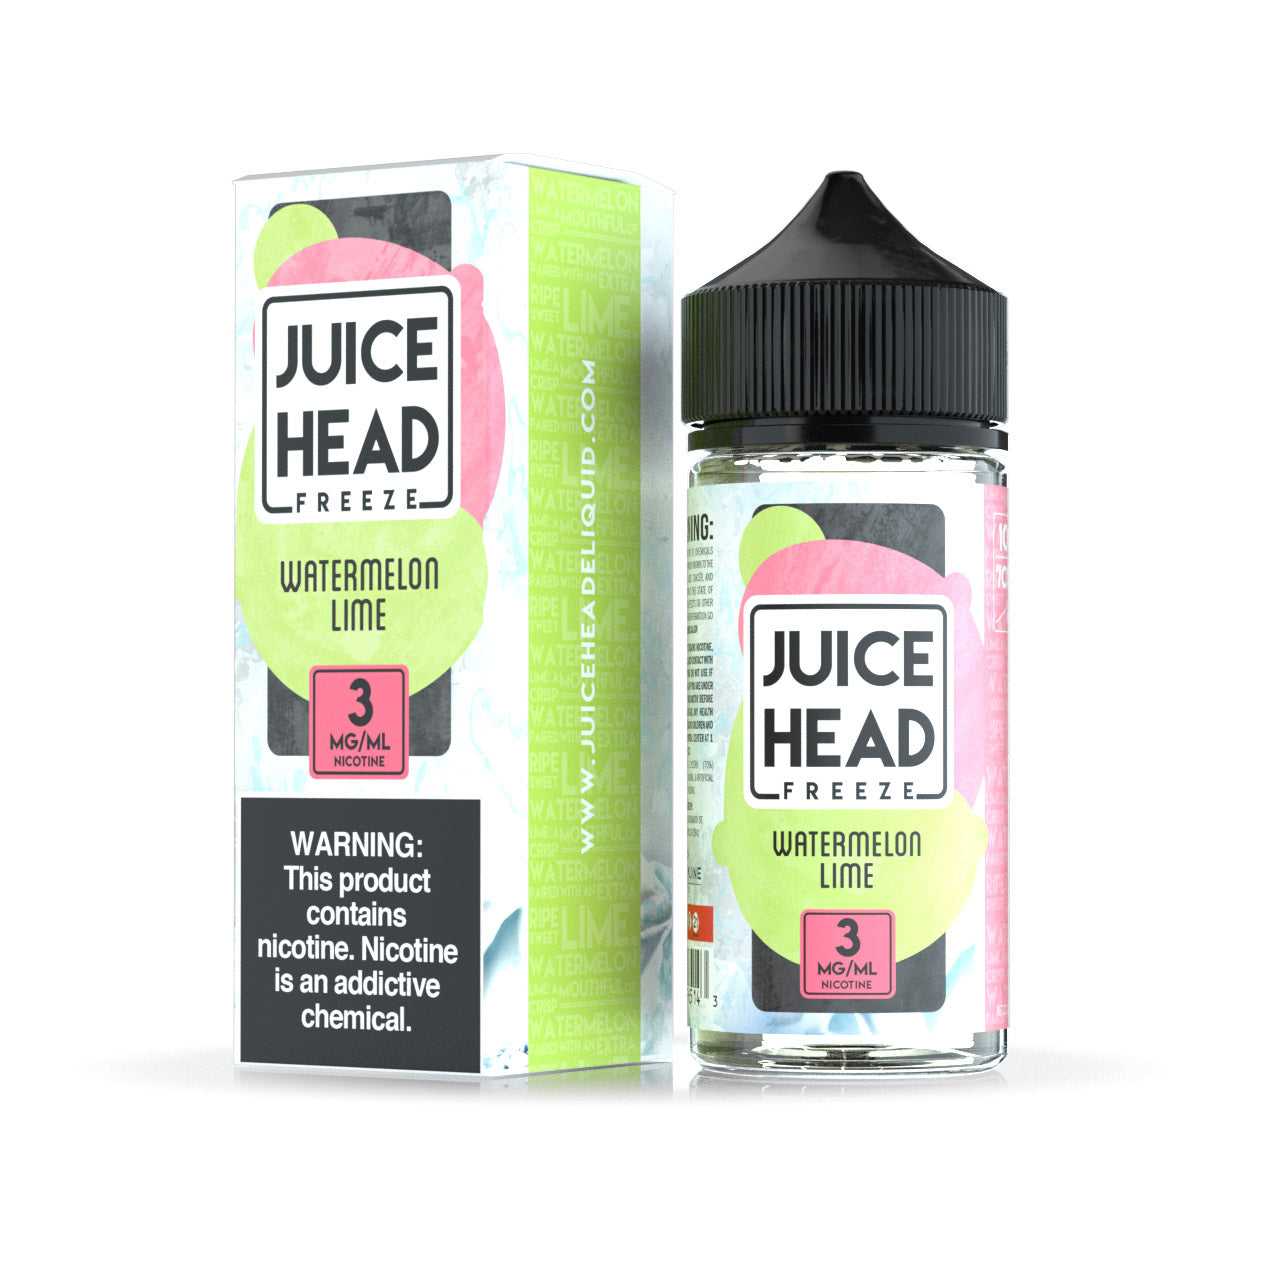 Juice Head - Watermelon Lime Freeze